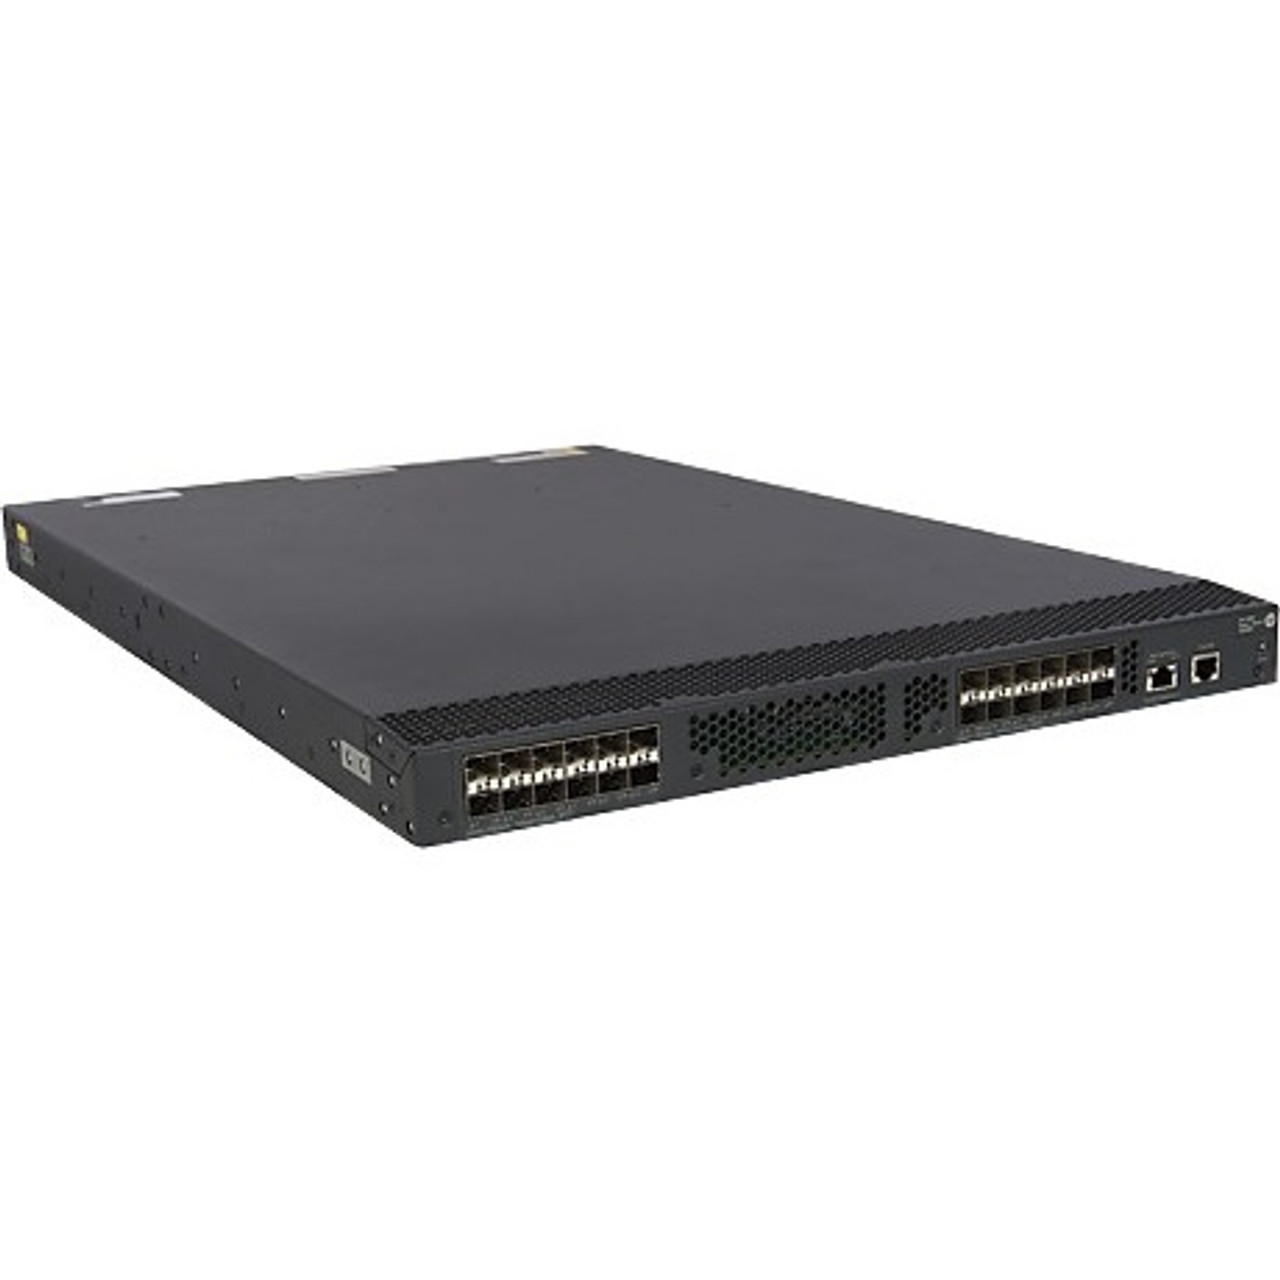 JG896AR HP Flexfabric 5700-40XG-2QSFP+ 40-Ports RJ-45 10/100/1000Base-T Manageable Layer 3 Rack-mountable 1U with Gigabit Ethernet QSFP+ Switch